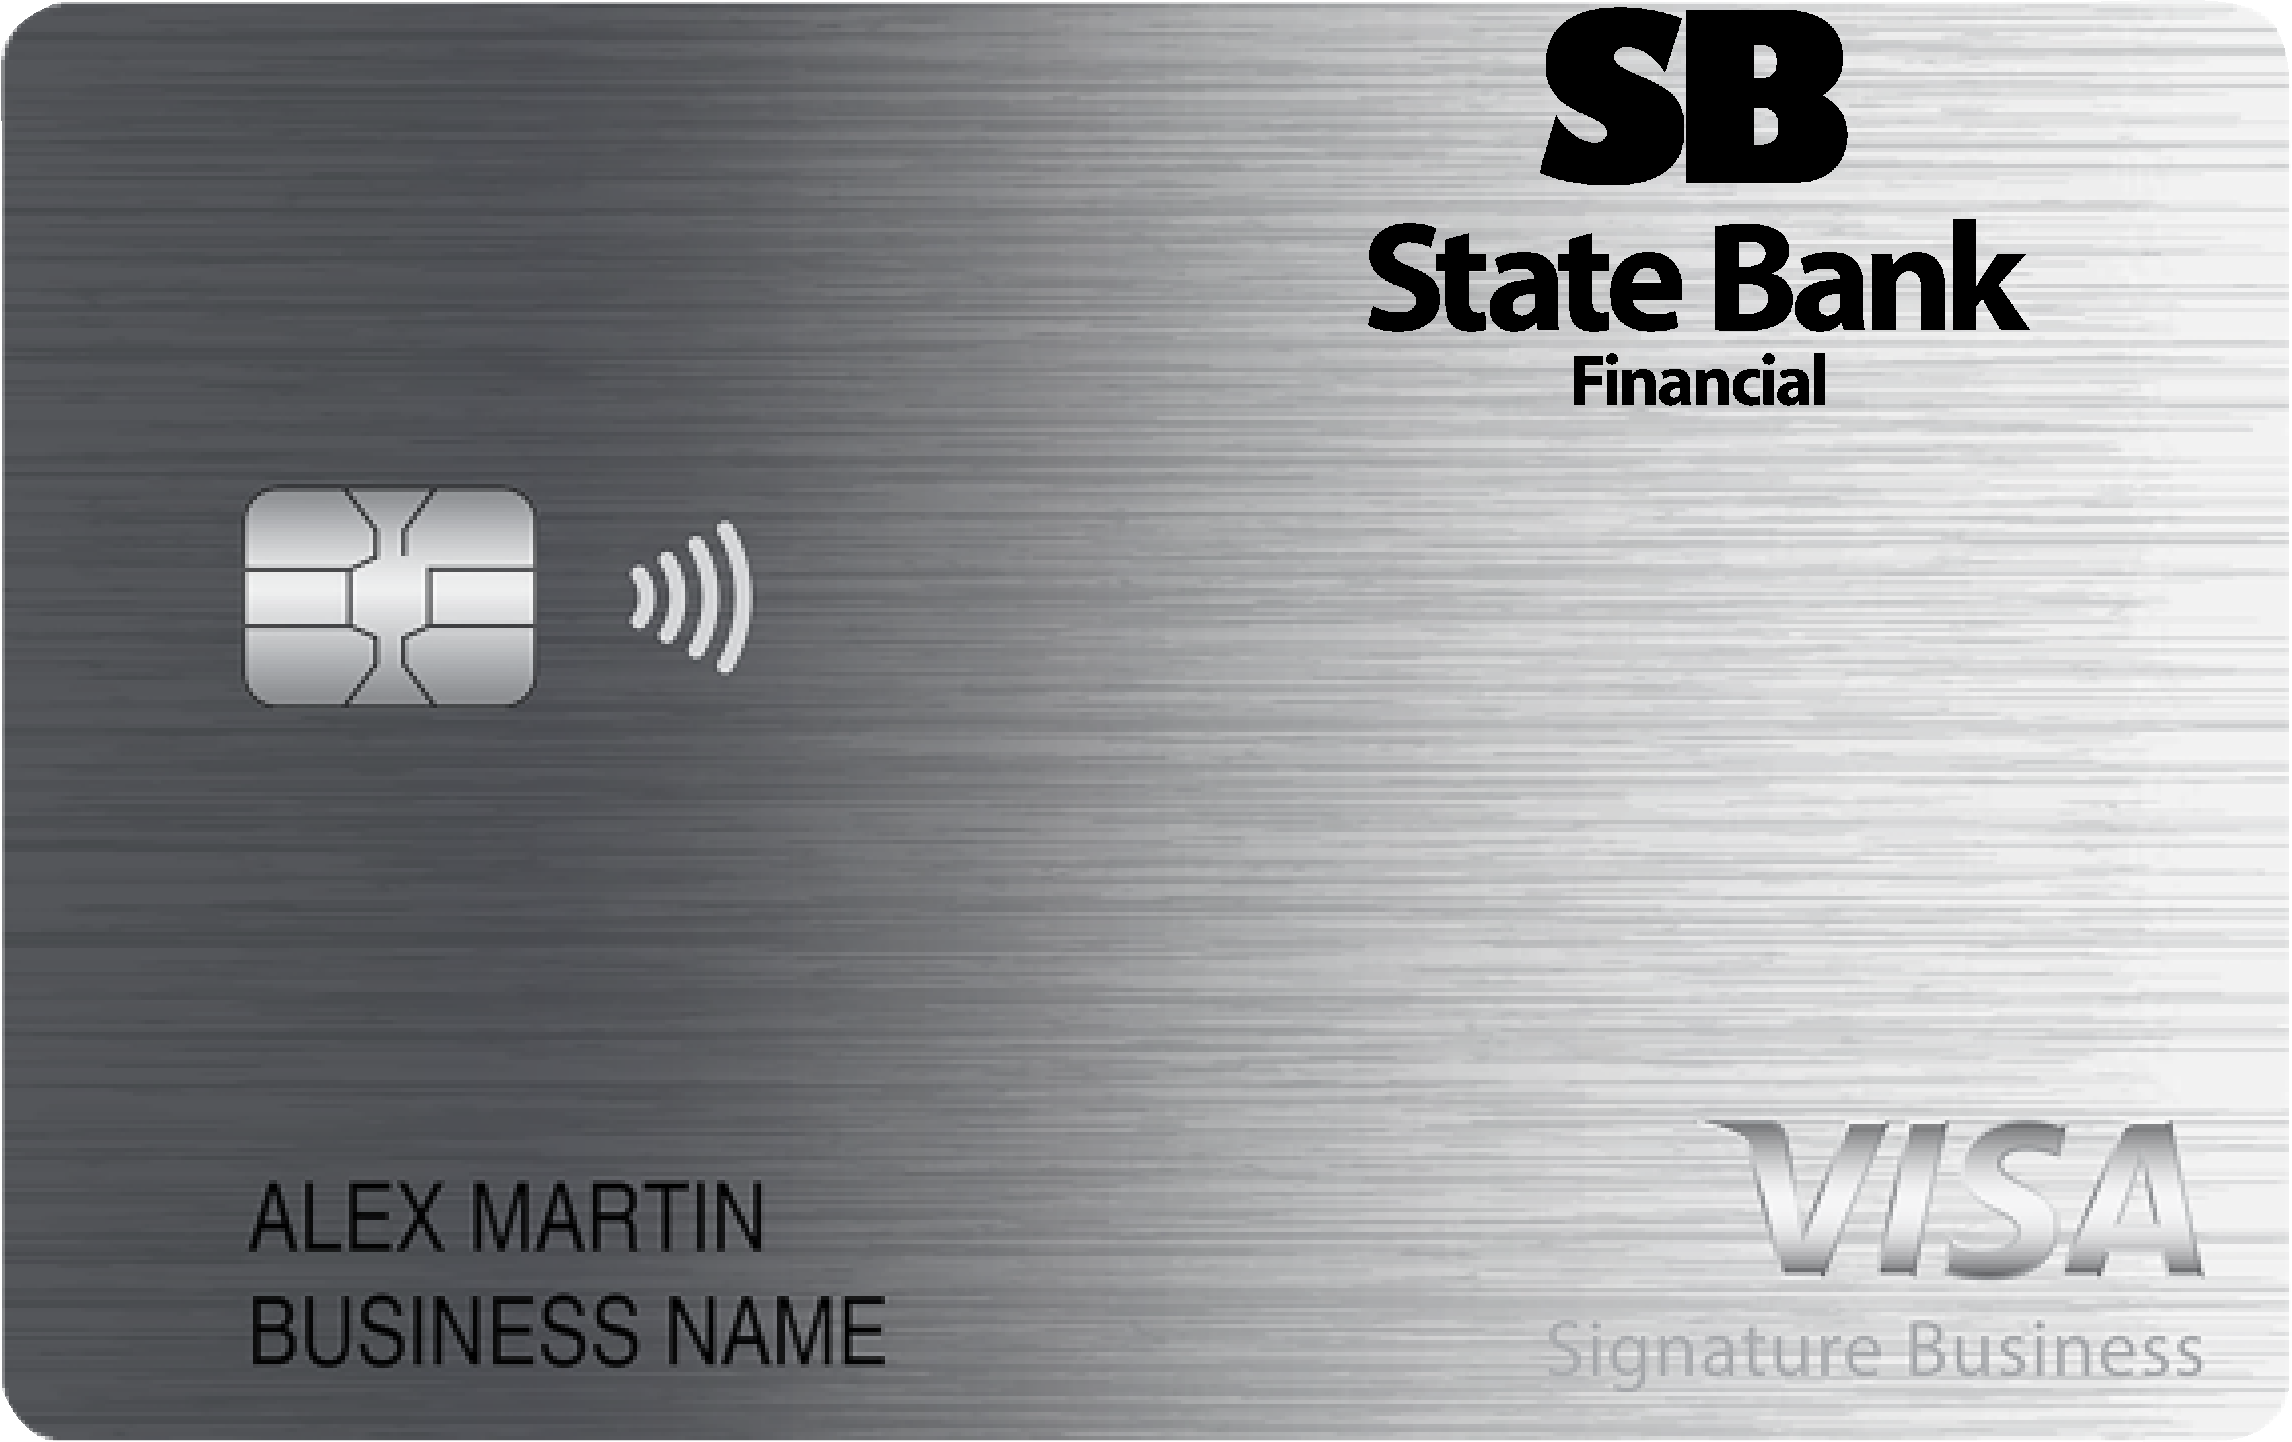 State Bank Financial Smart Business Rewards Card